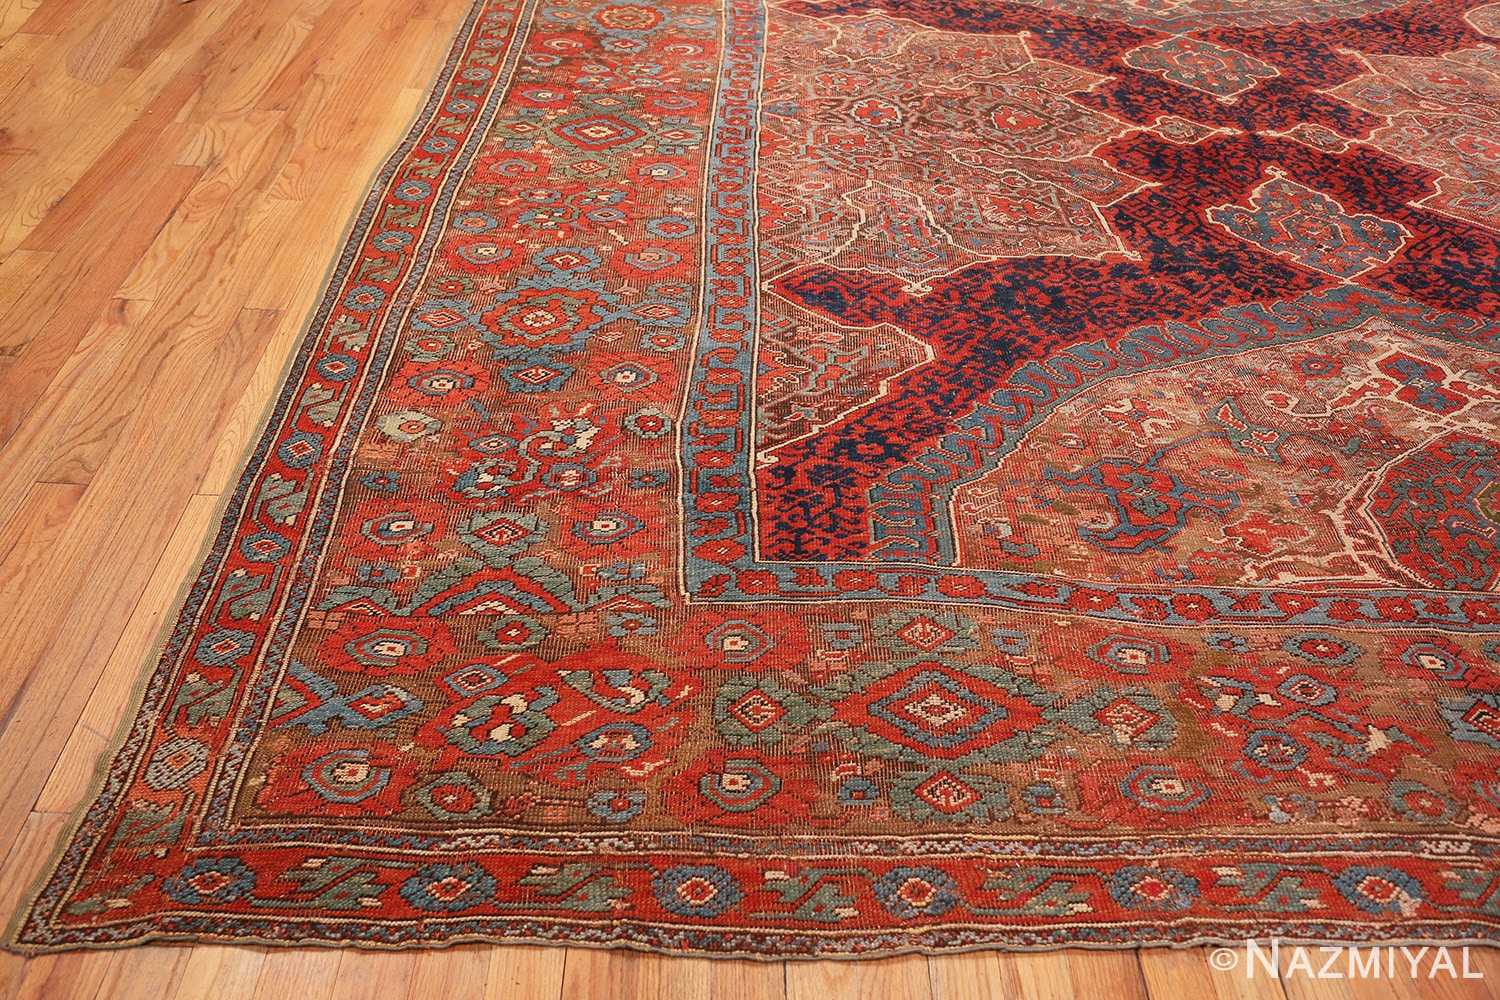 Tribal Oversize Rugs Turkish Rug Vintage Rug Large Carpet 8372 61x122 inches Red Carpet Handwoven Salon Carpet Oushak Carpet